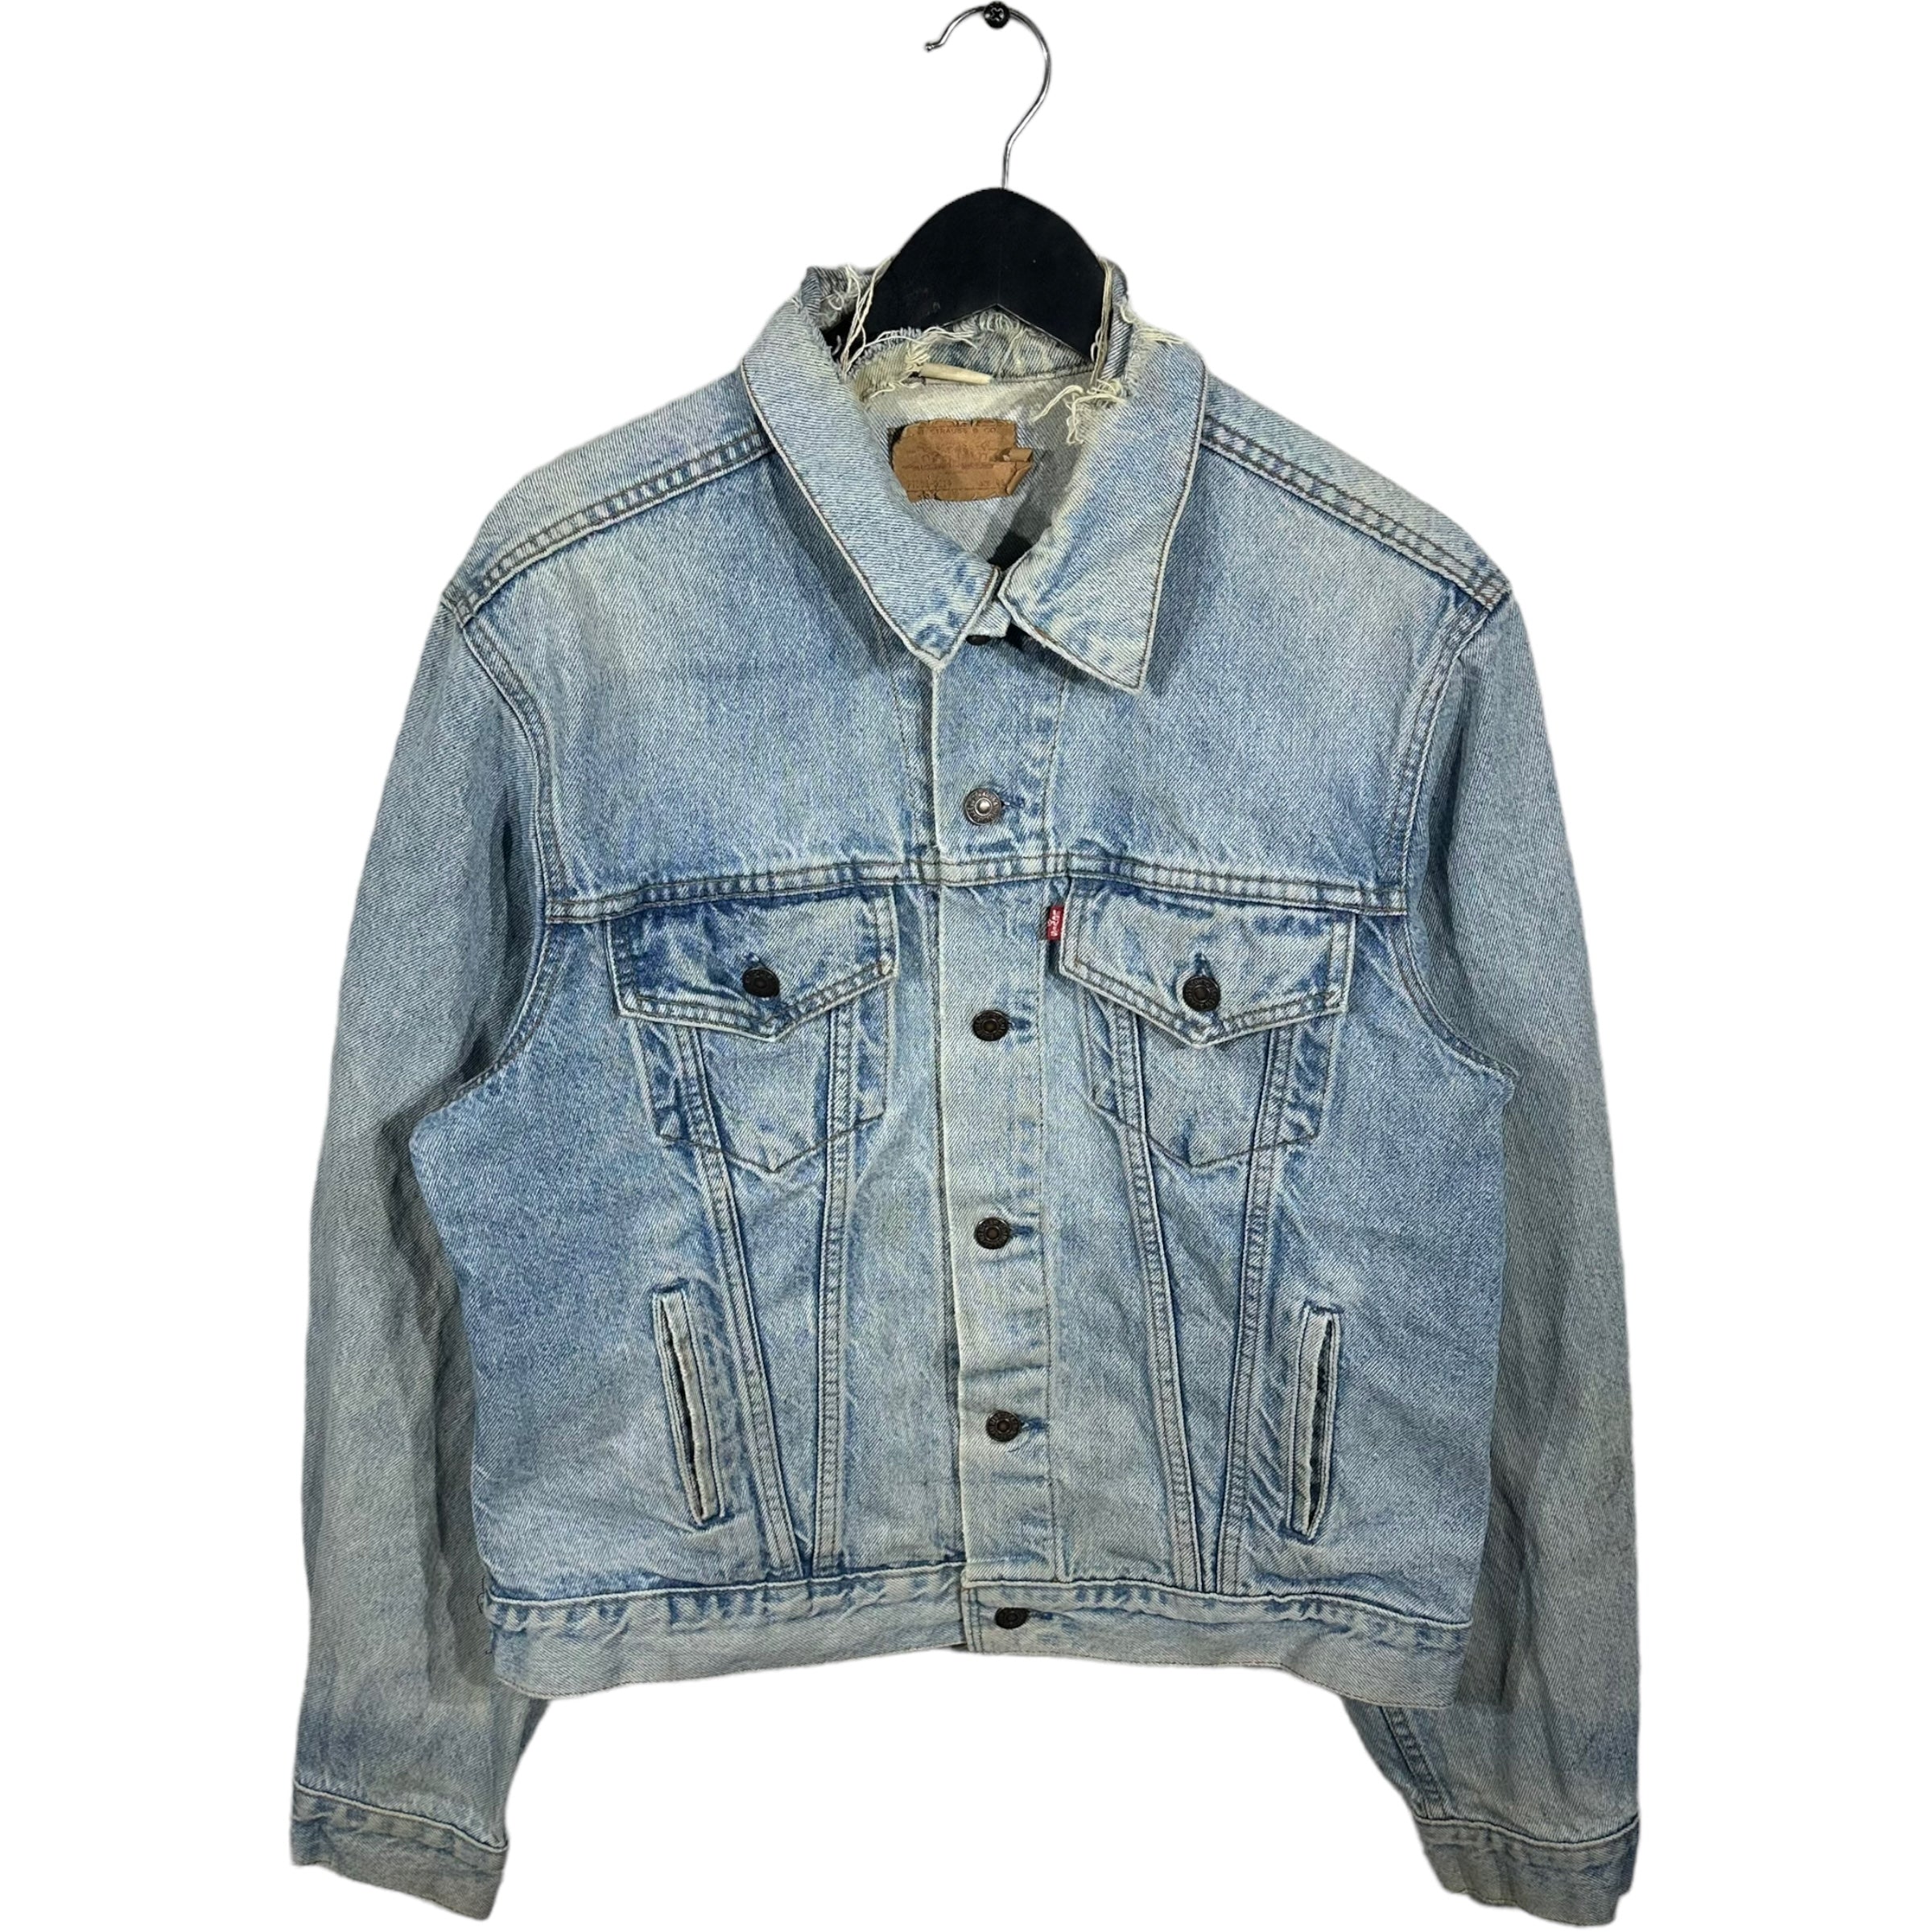 Vintage Levis Distressed Denim Jacket